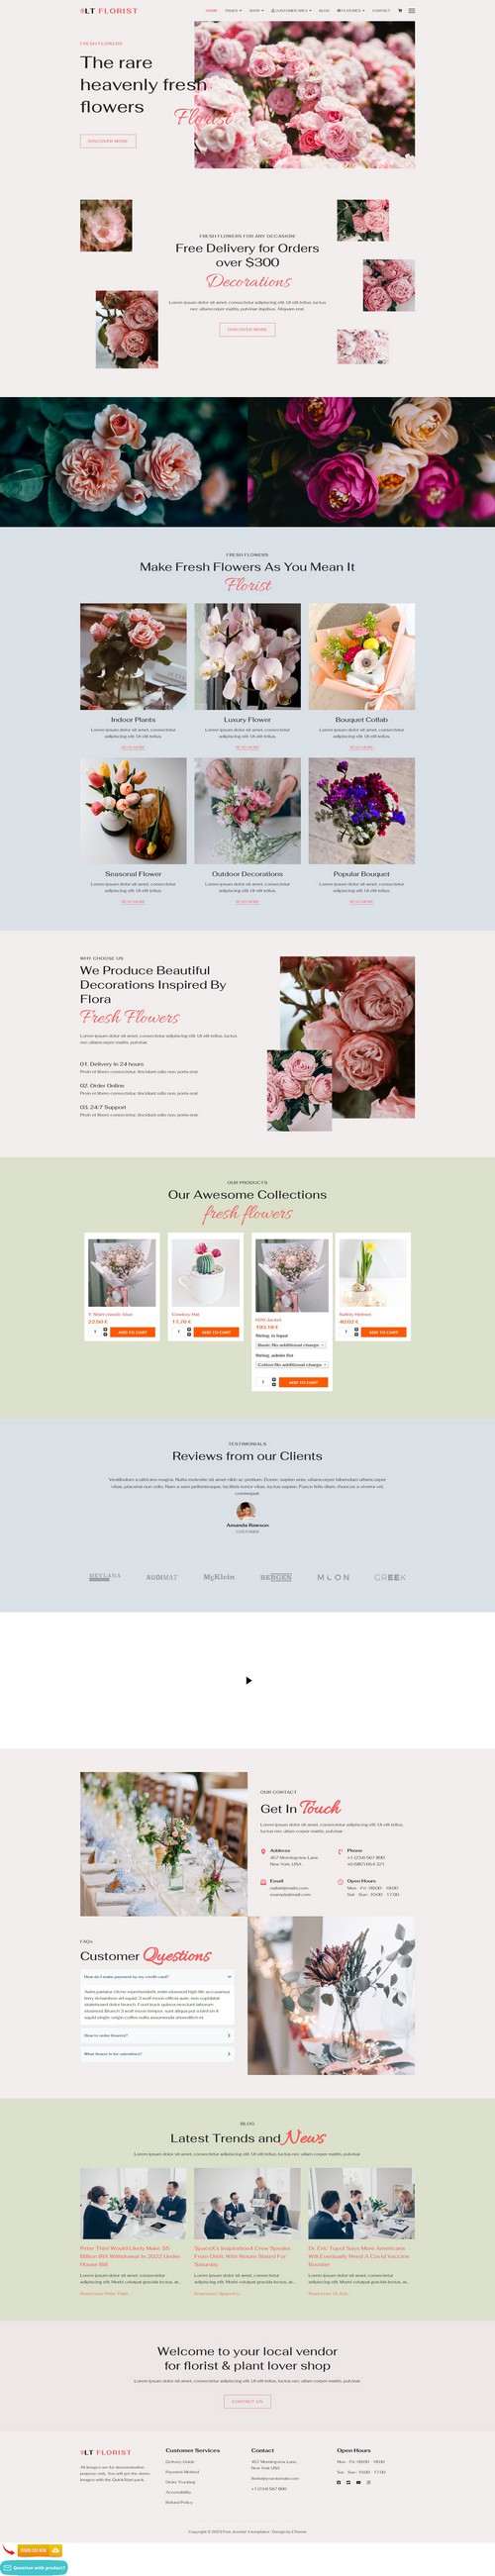 LT Florist - Responsive Joomla 4 template for flower shop sites